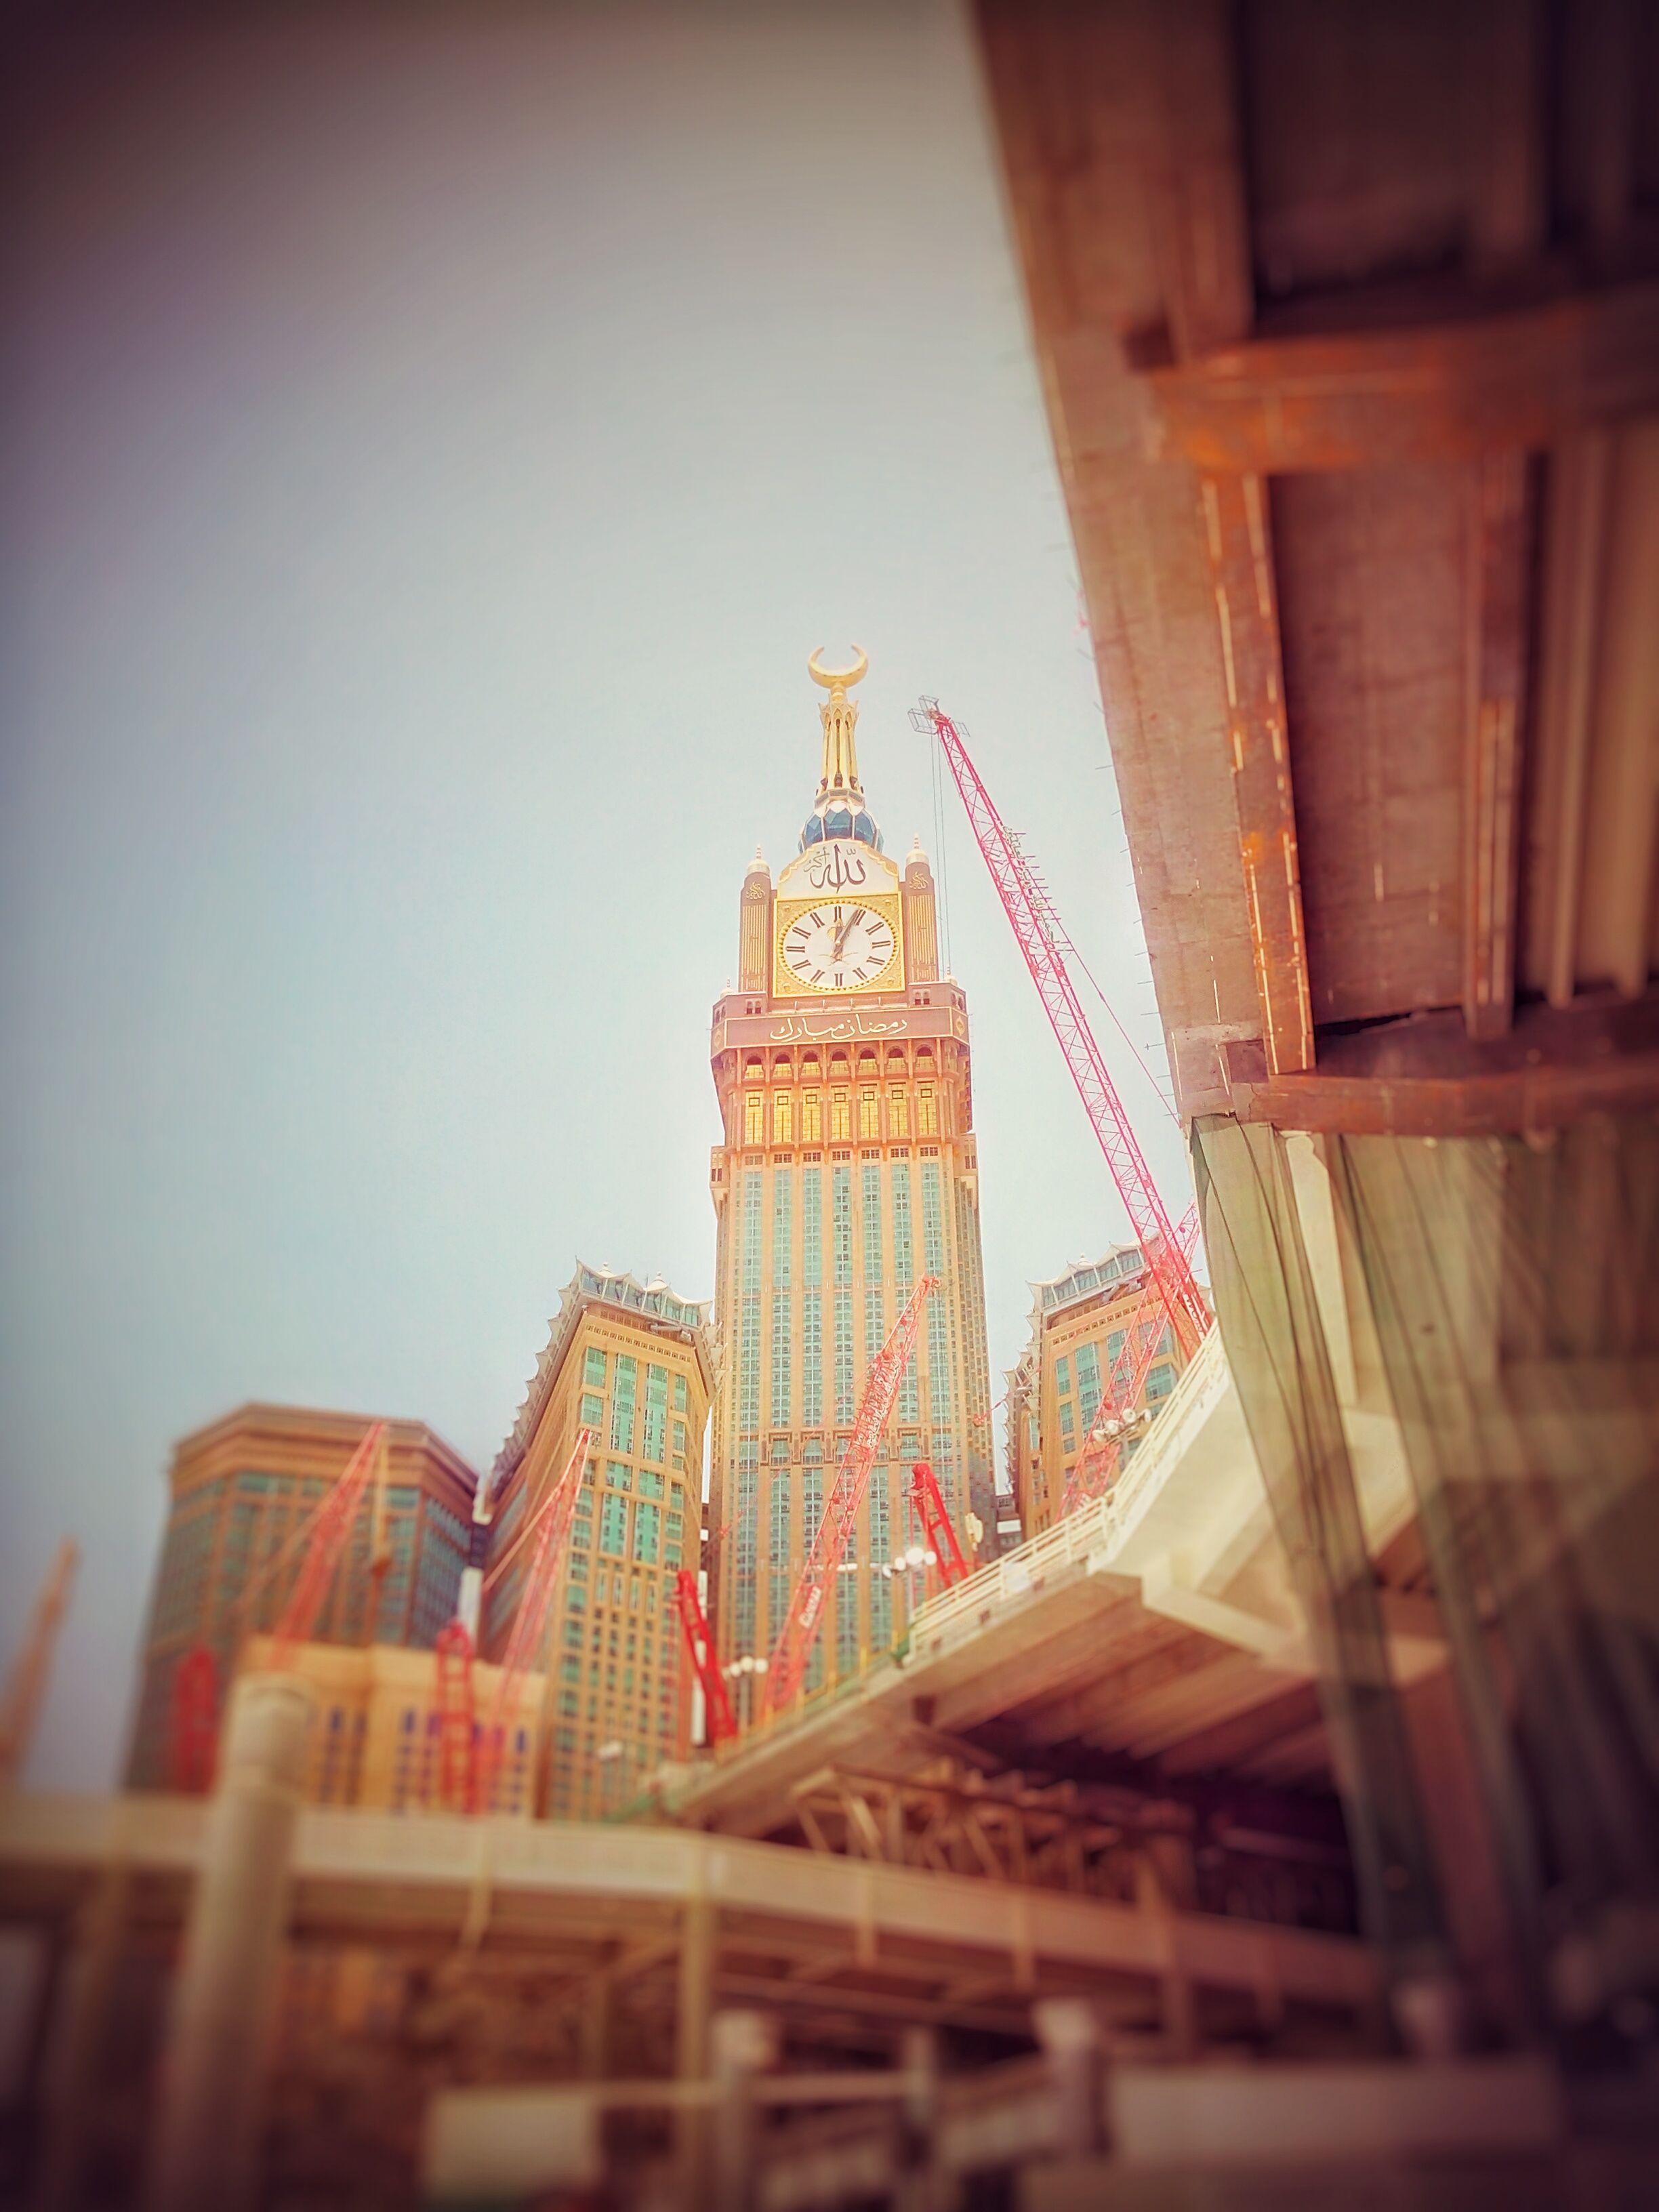 Islam image Makkah clock tower HD wallpaper and background photo